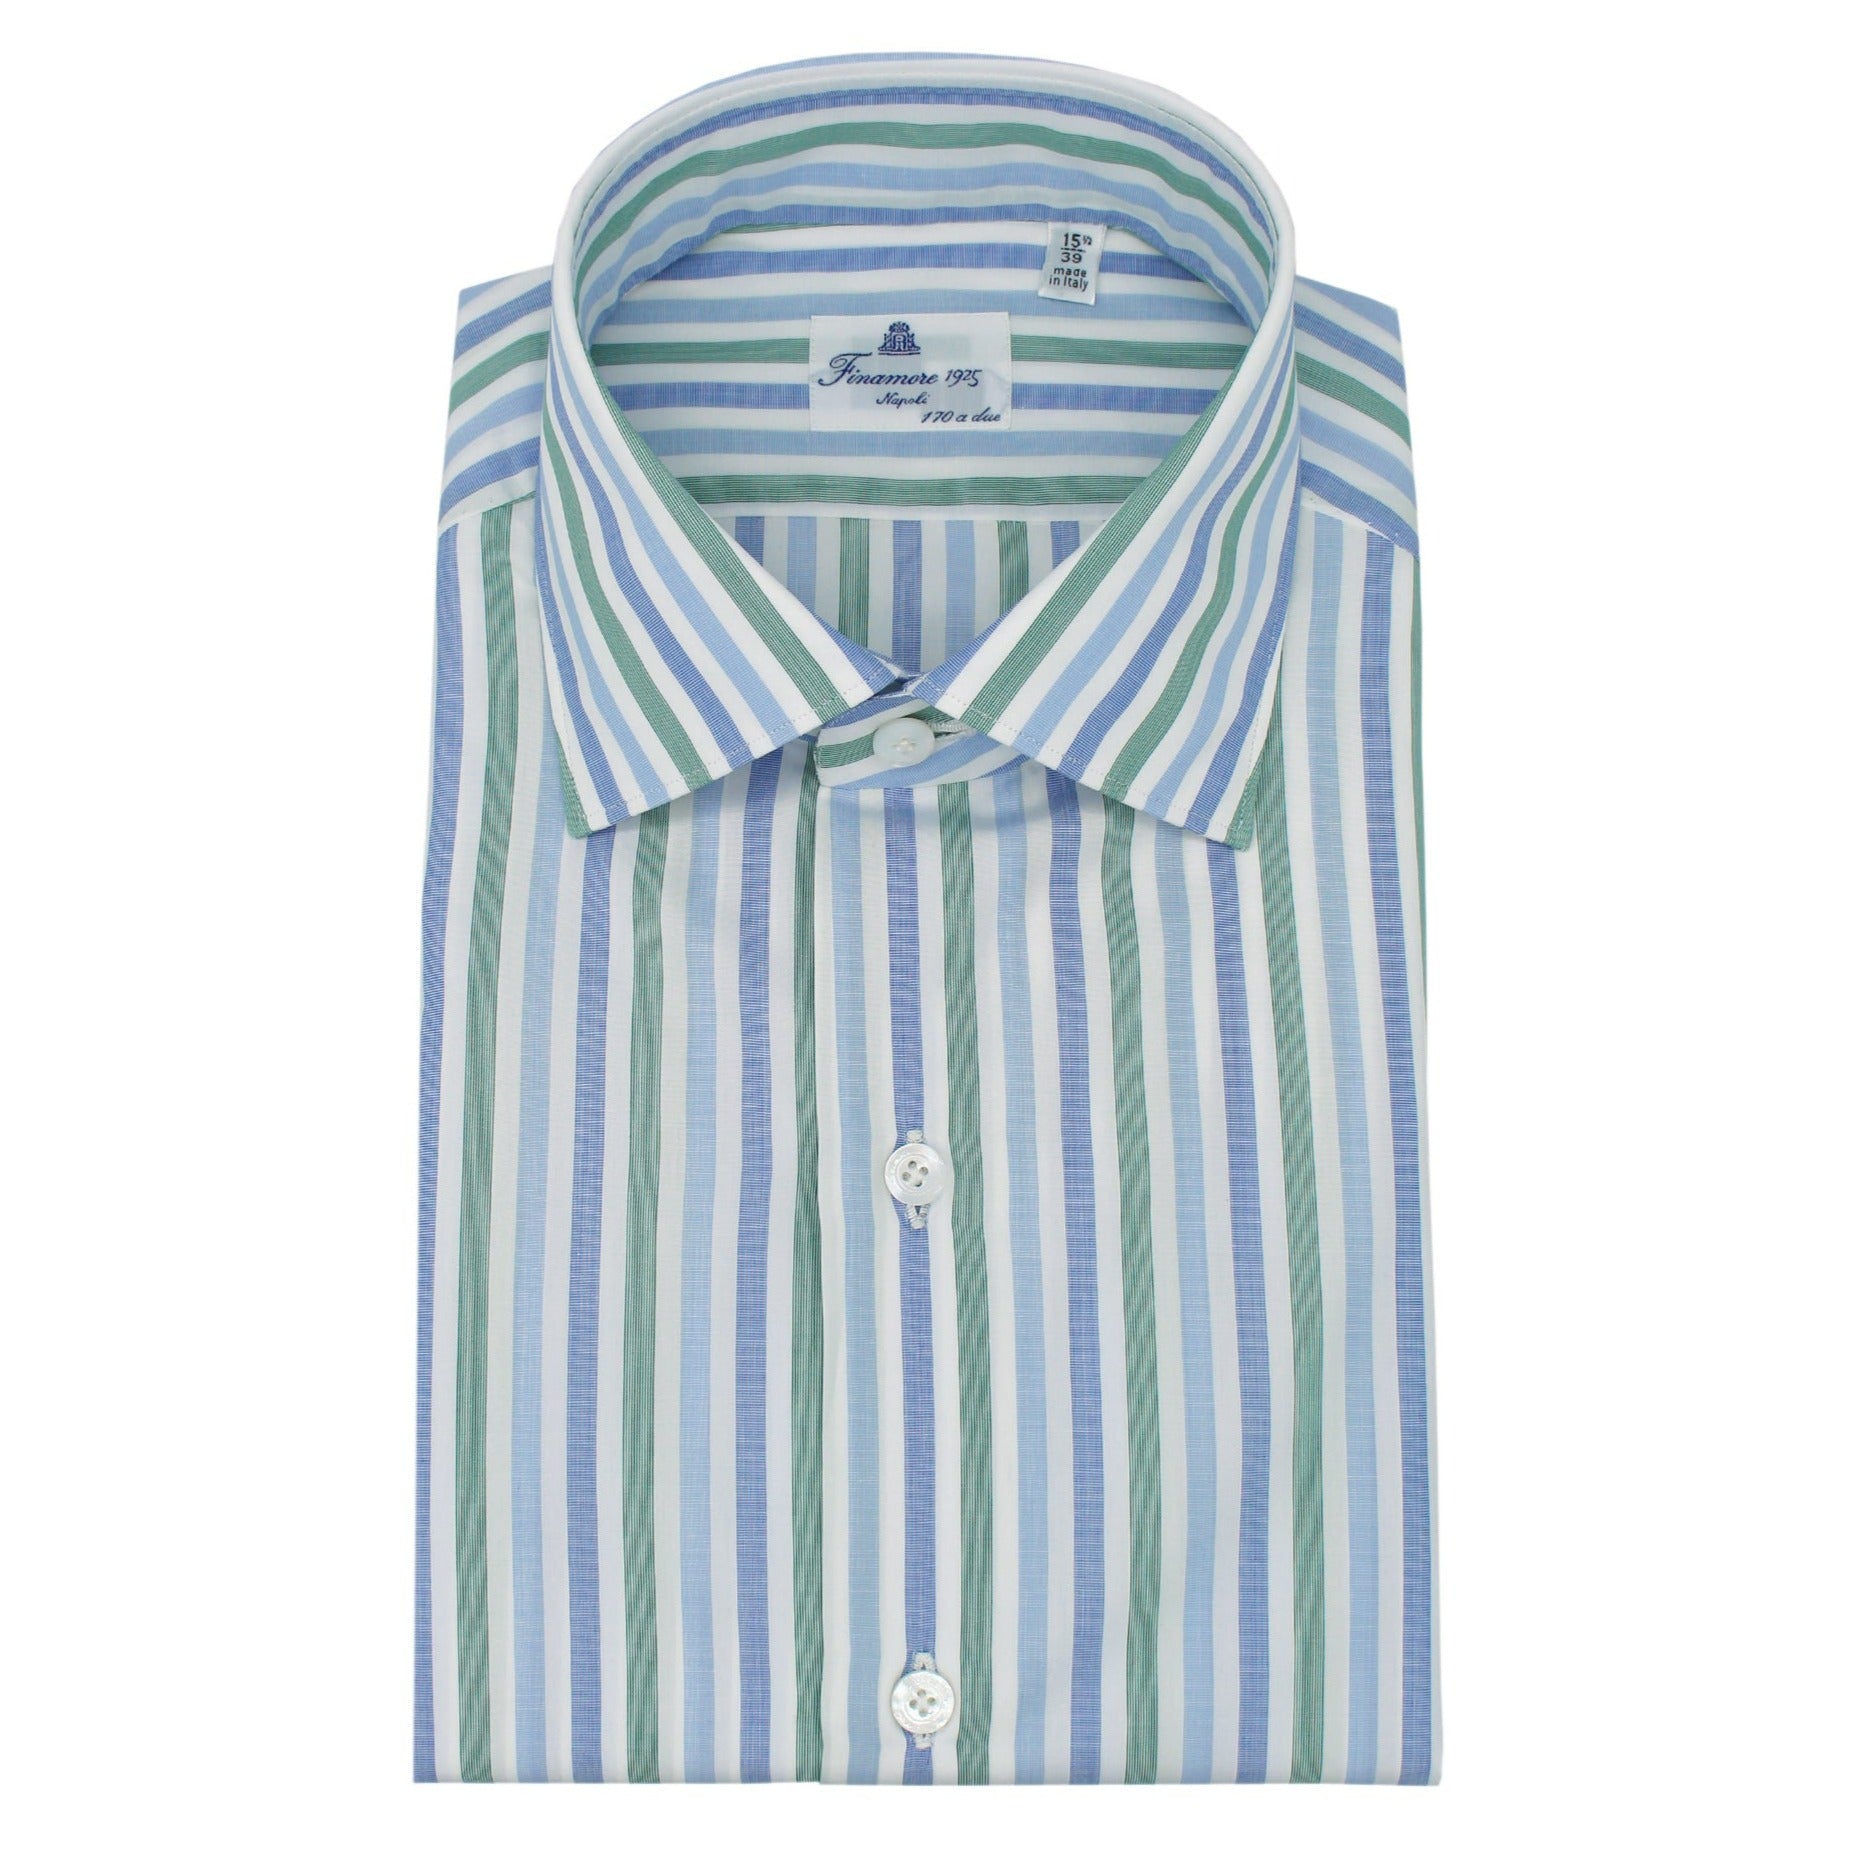 Classic Striped Blue and Green Cotton Giza 45 Shirt